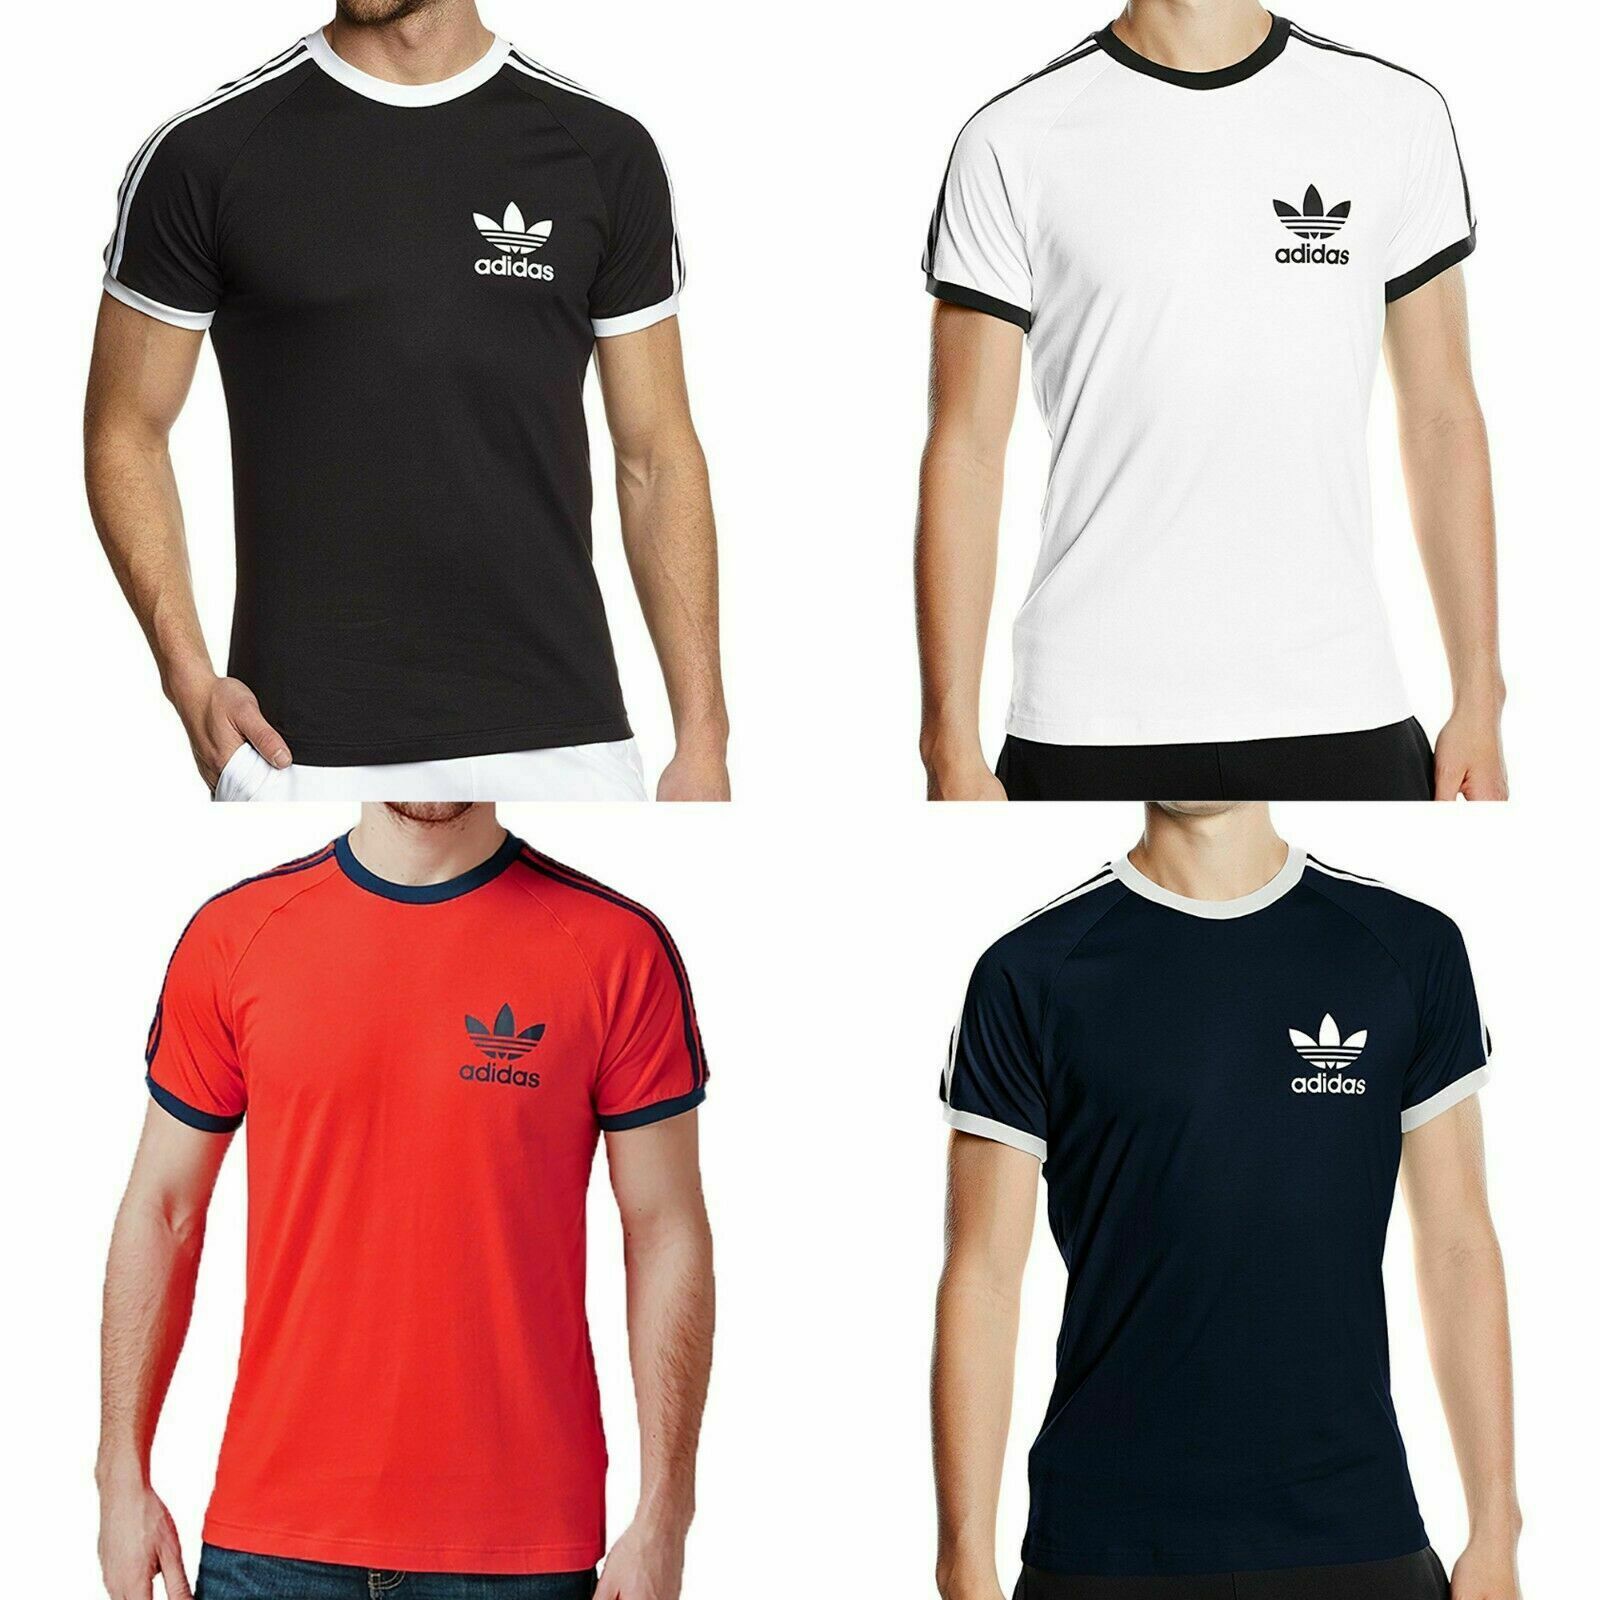 Adidas California T shirt offer Europe